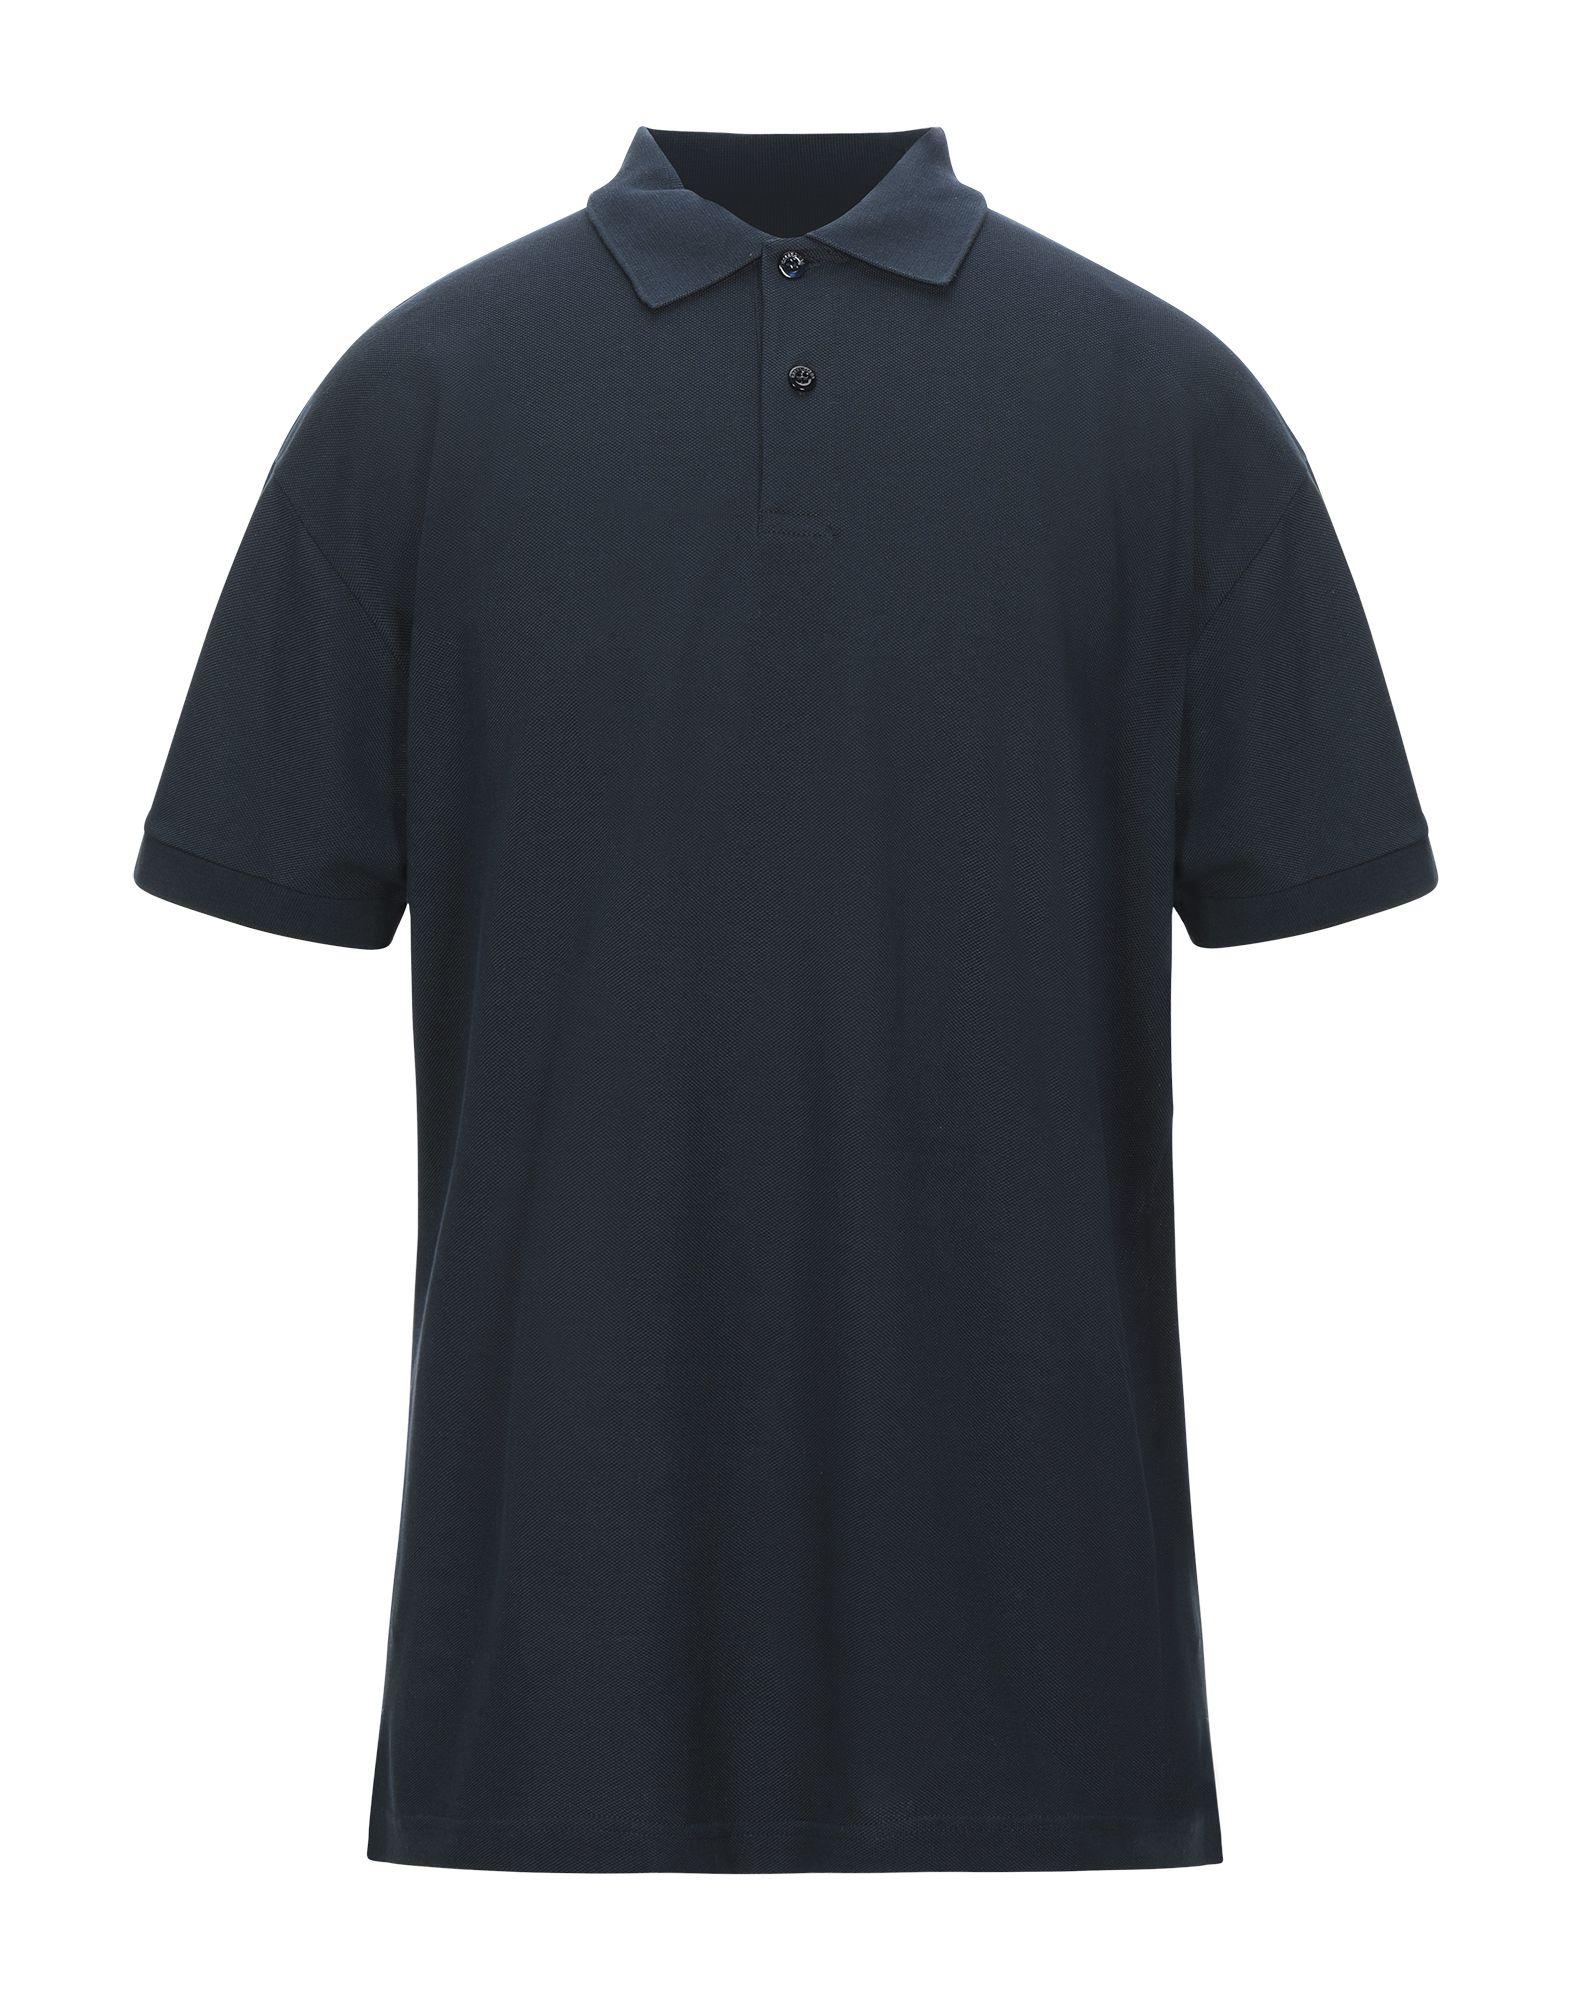 Balenciaga Cotton Polo Shirt in Dark Blue (Blue) for Men - Lyst